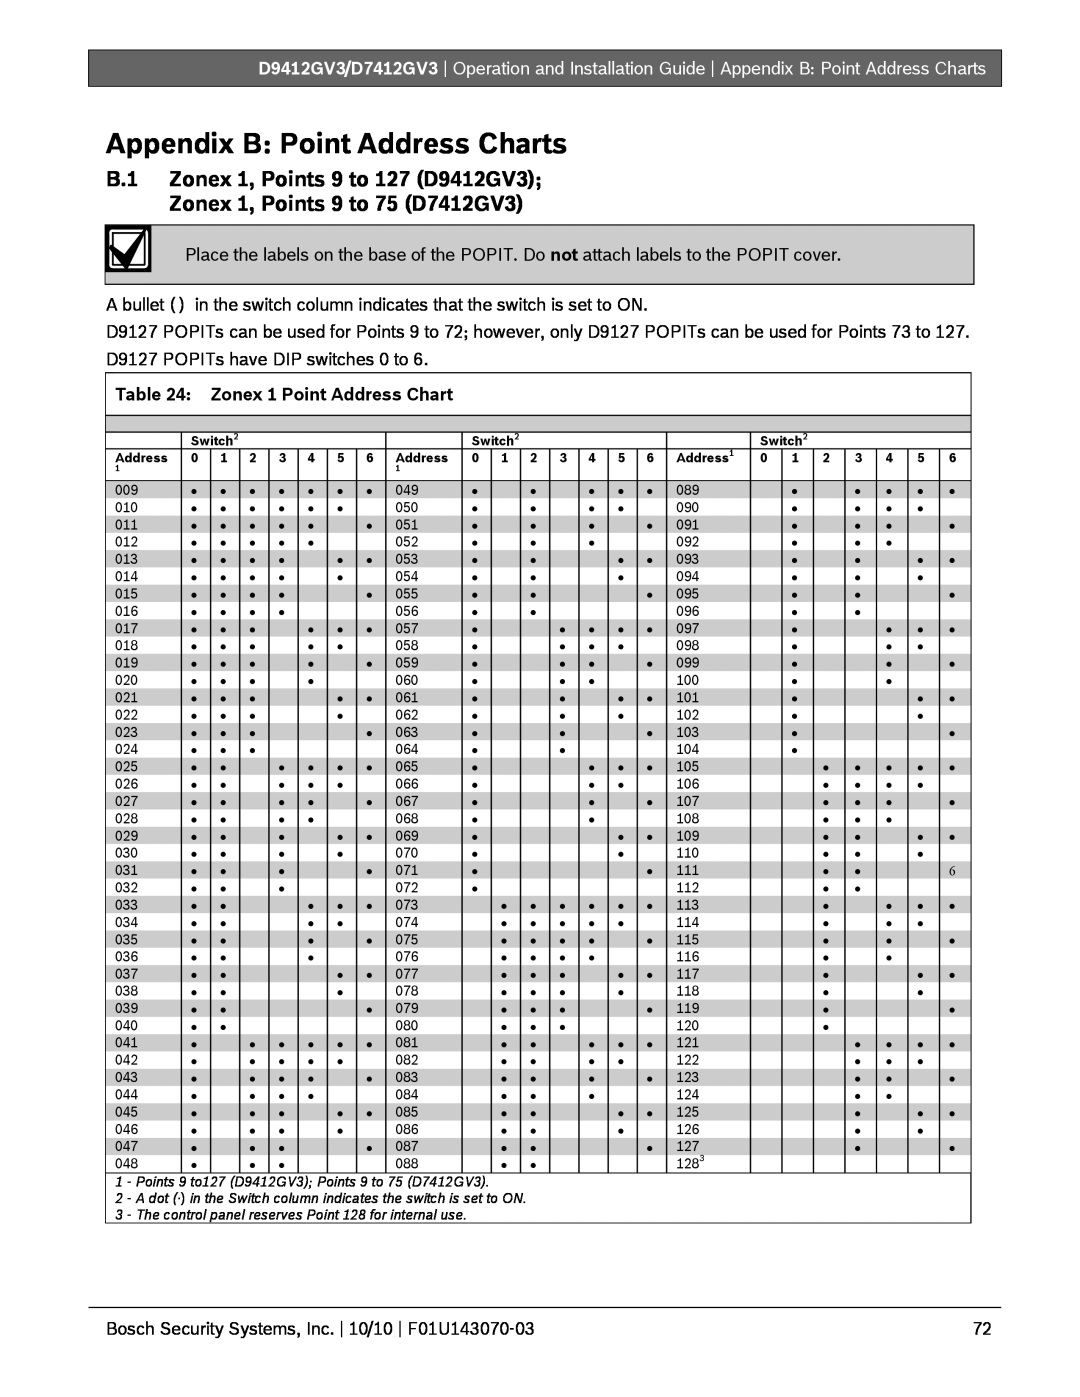 Bosch Appliances Appendix B: Point Address Charts, B.1 Zonex 1, Points 9 to 127 D9412GV3, Zonex 1 Point Address Chart 